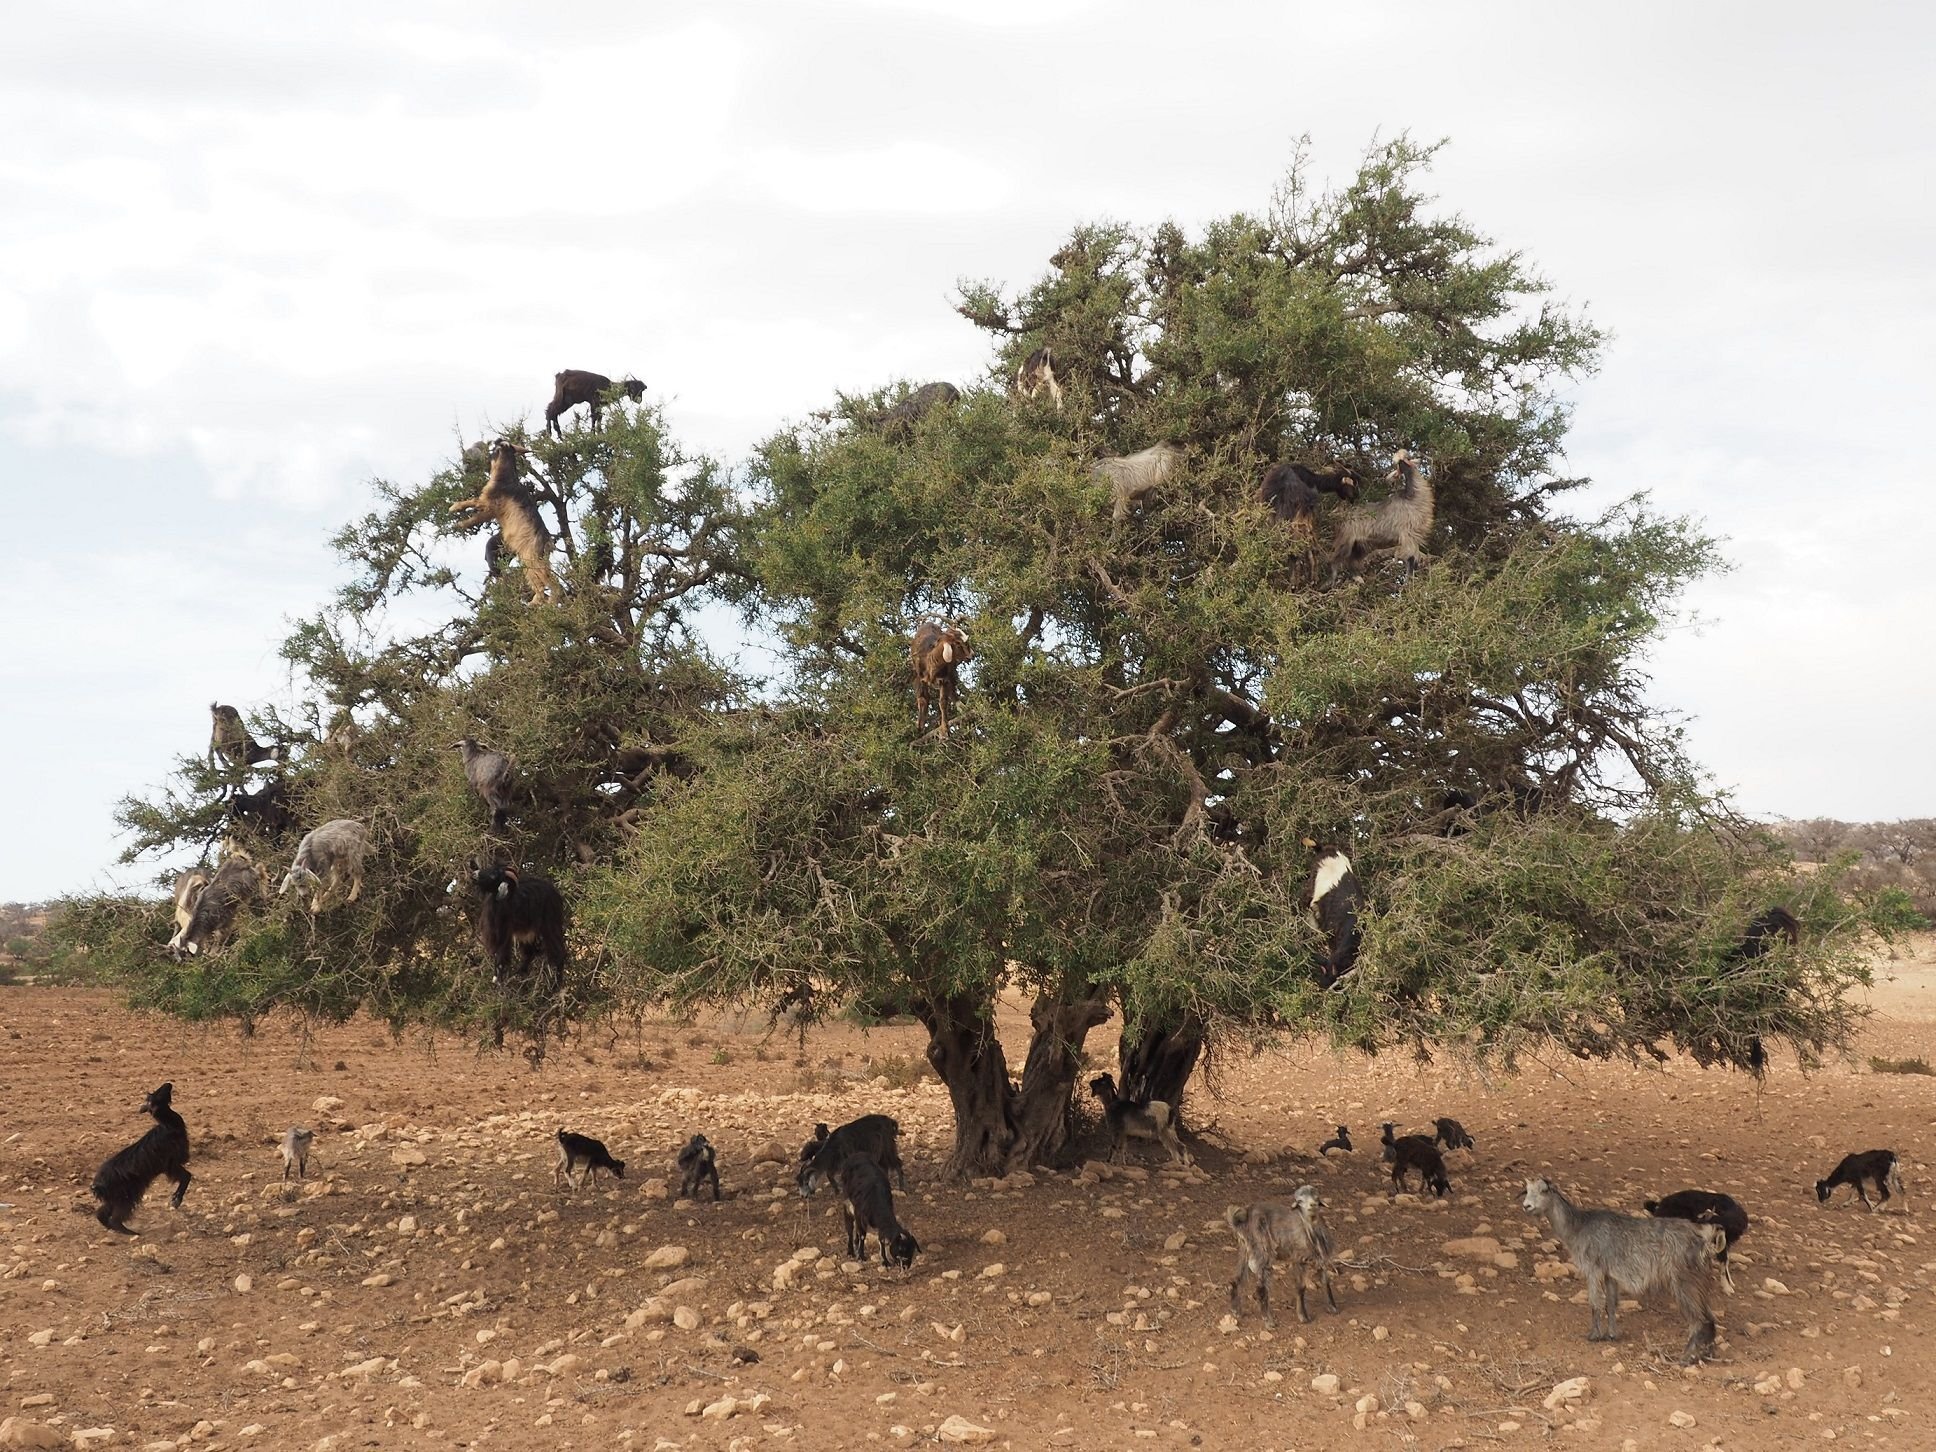 Goats climbing up an Argan tree in Morocco